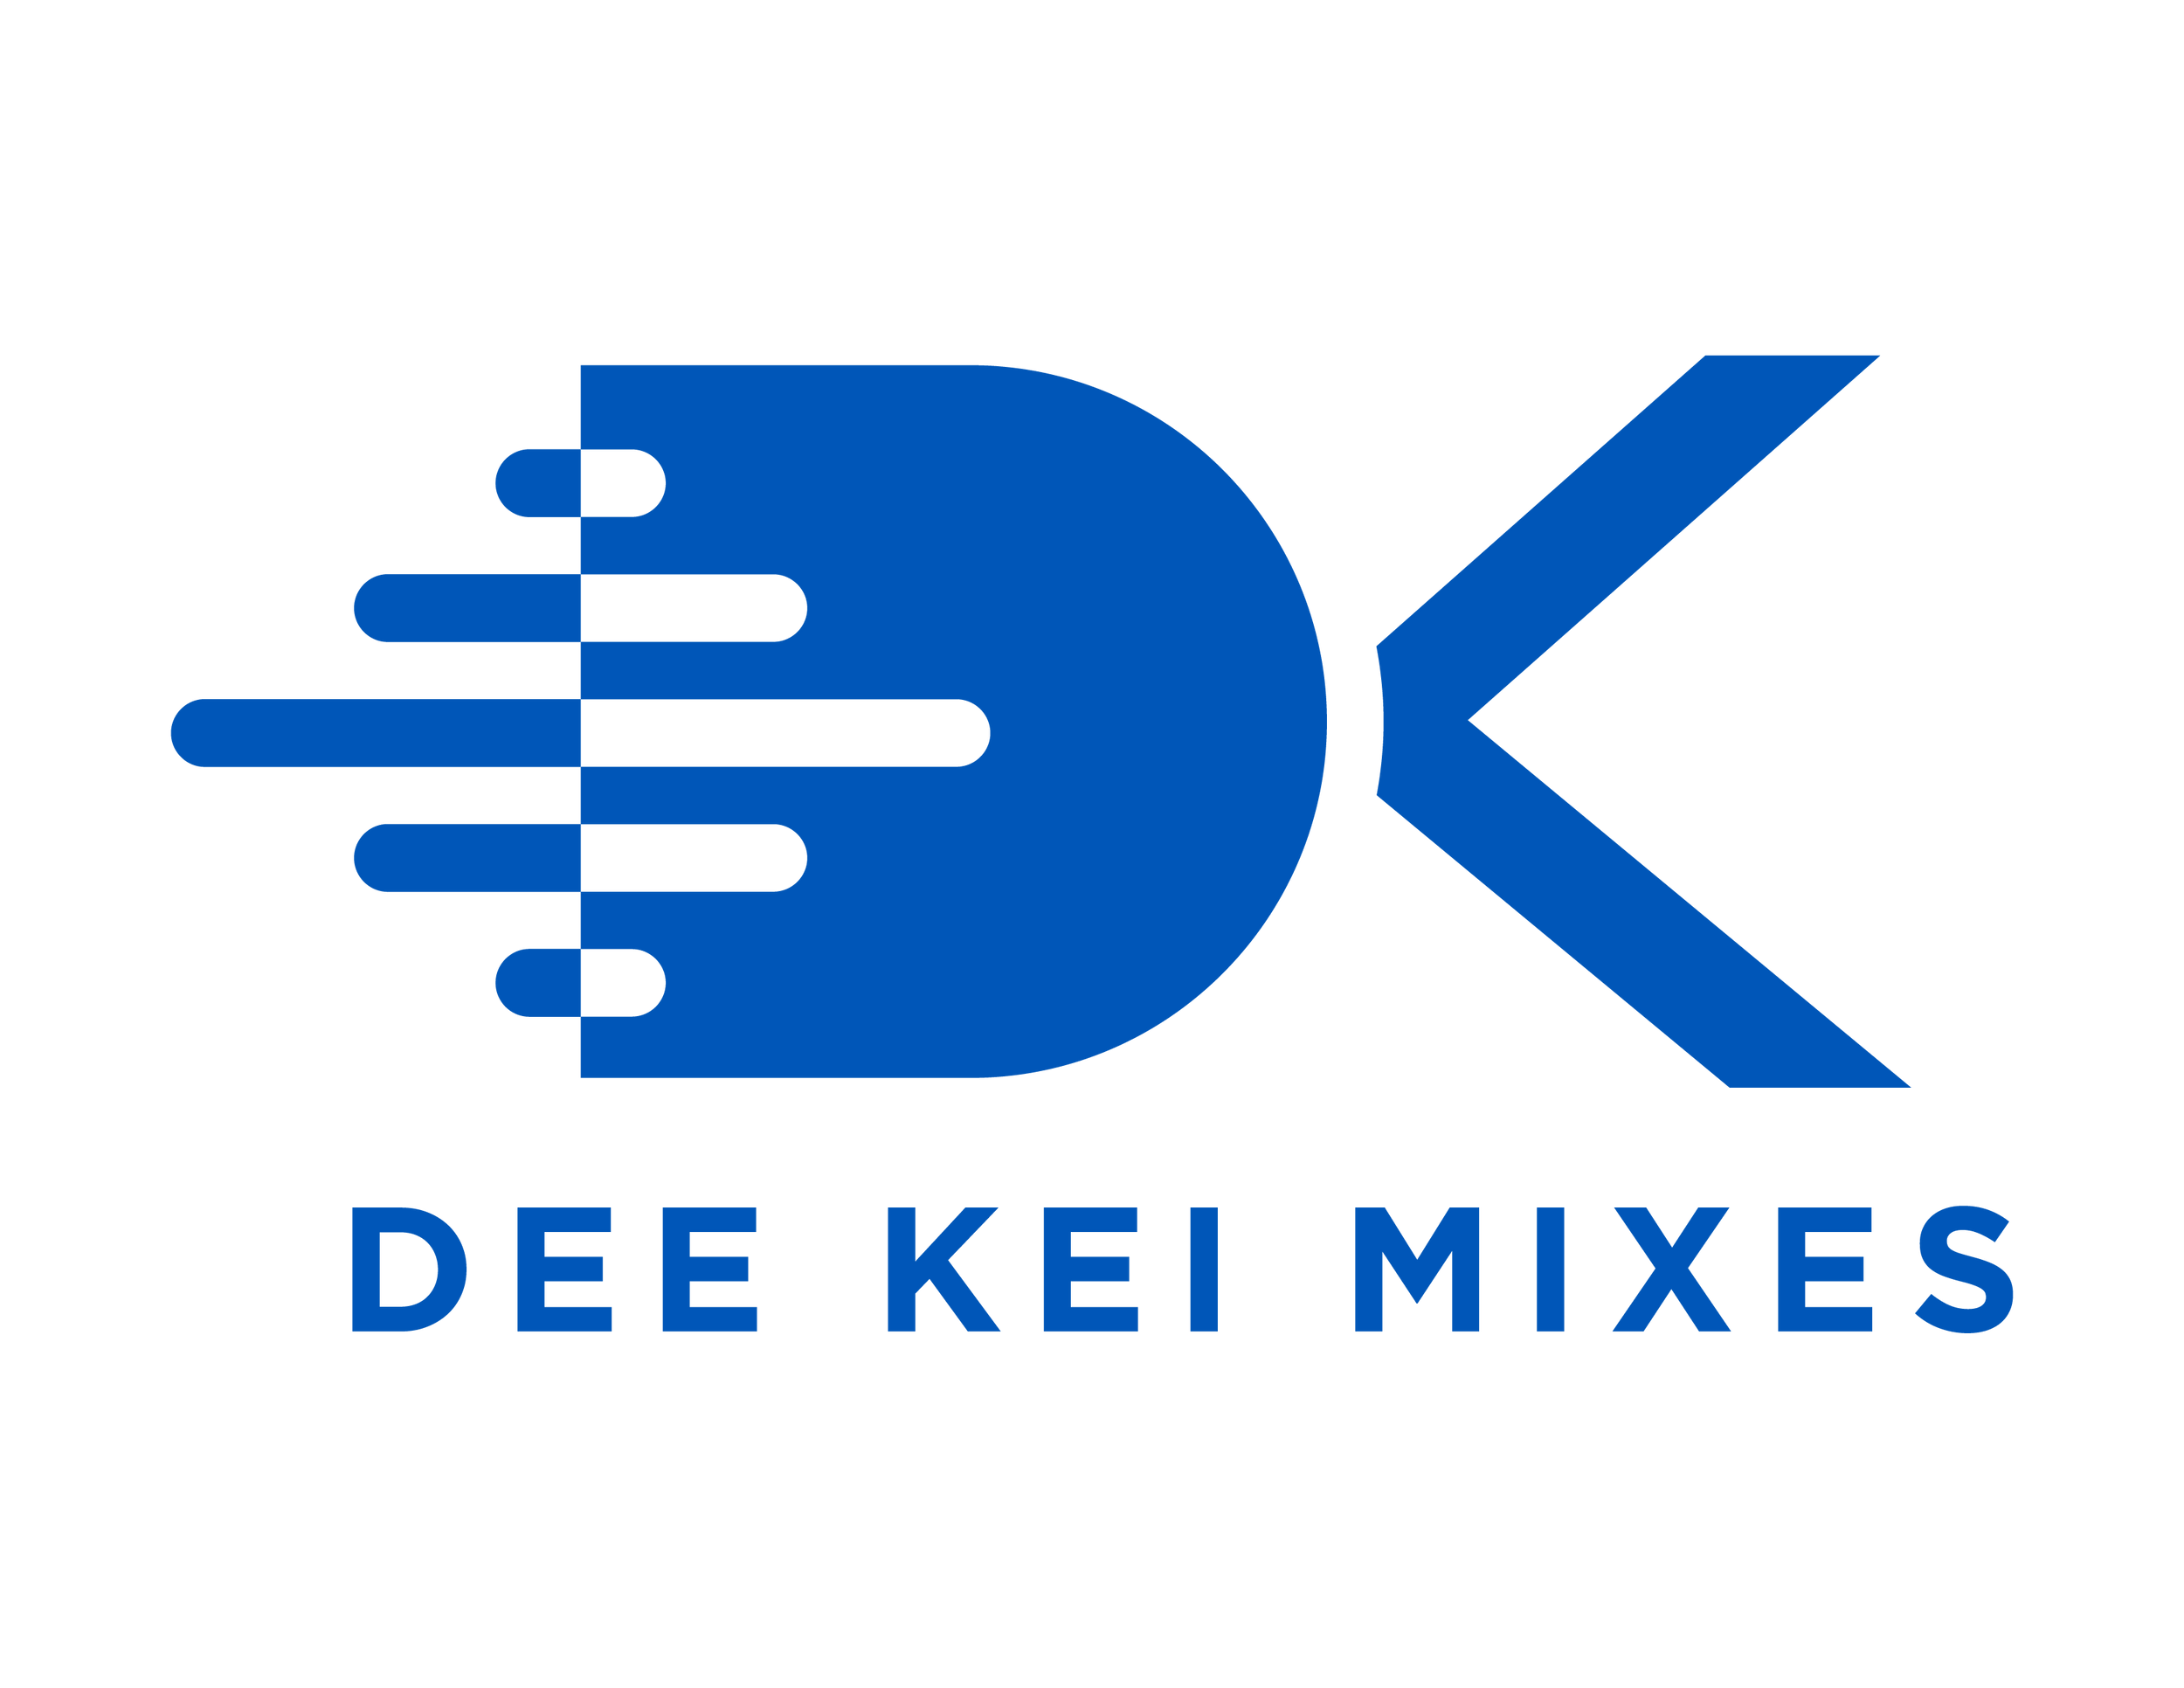 www.deekeimixes.com